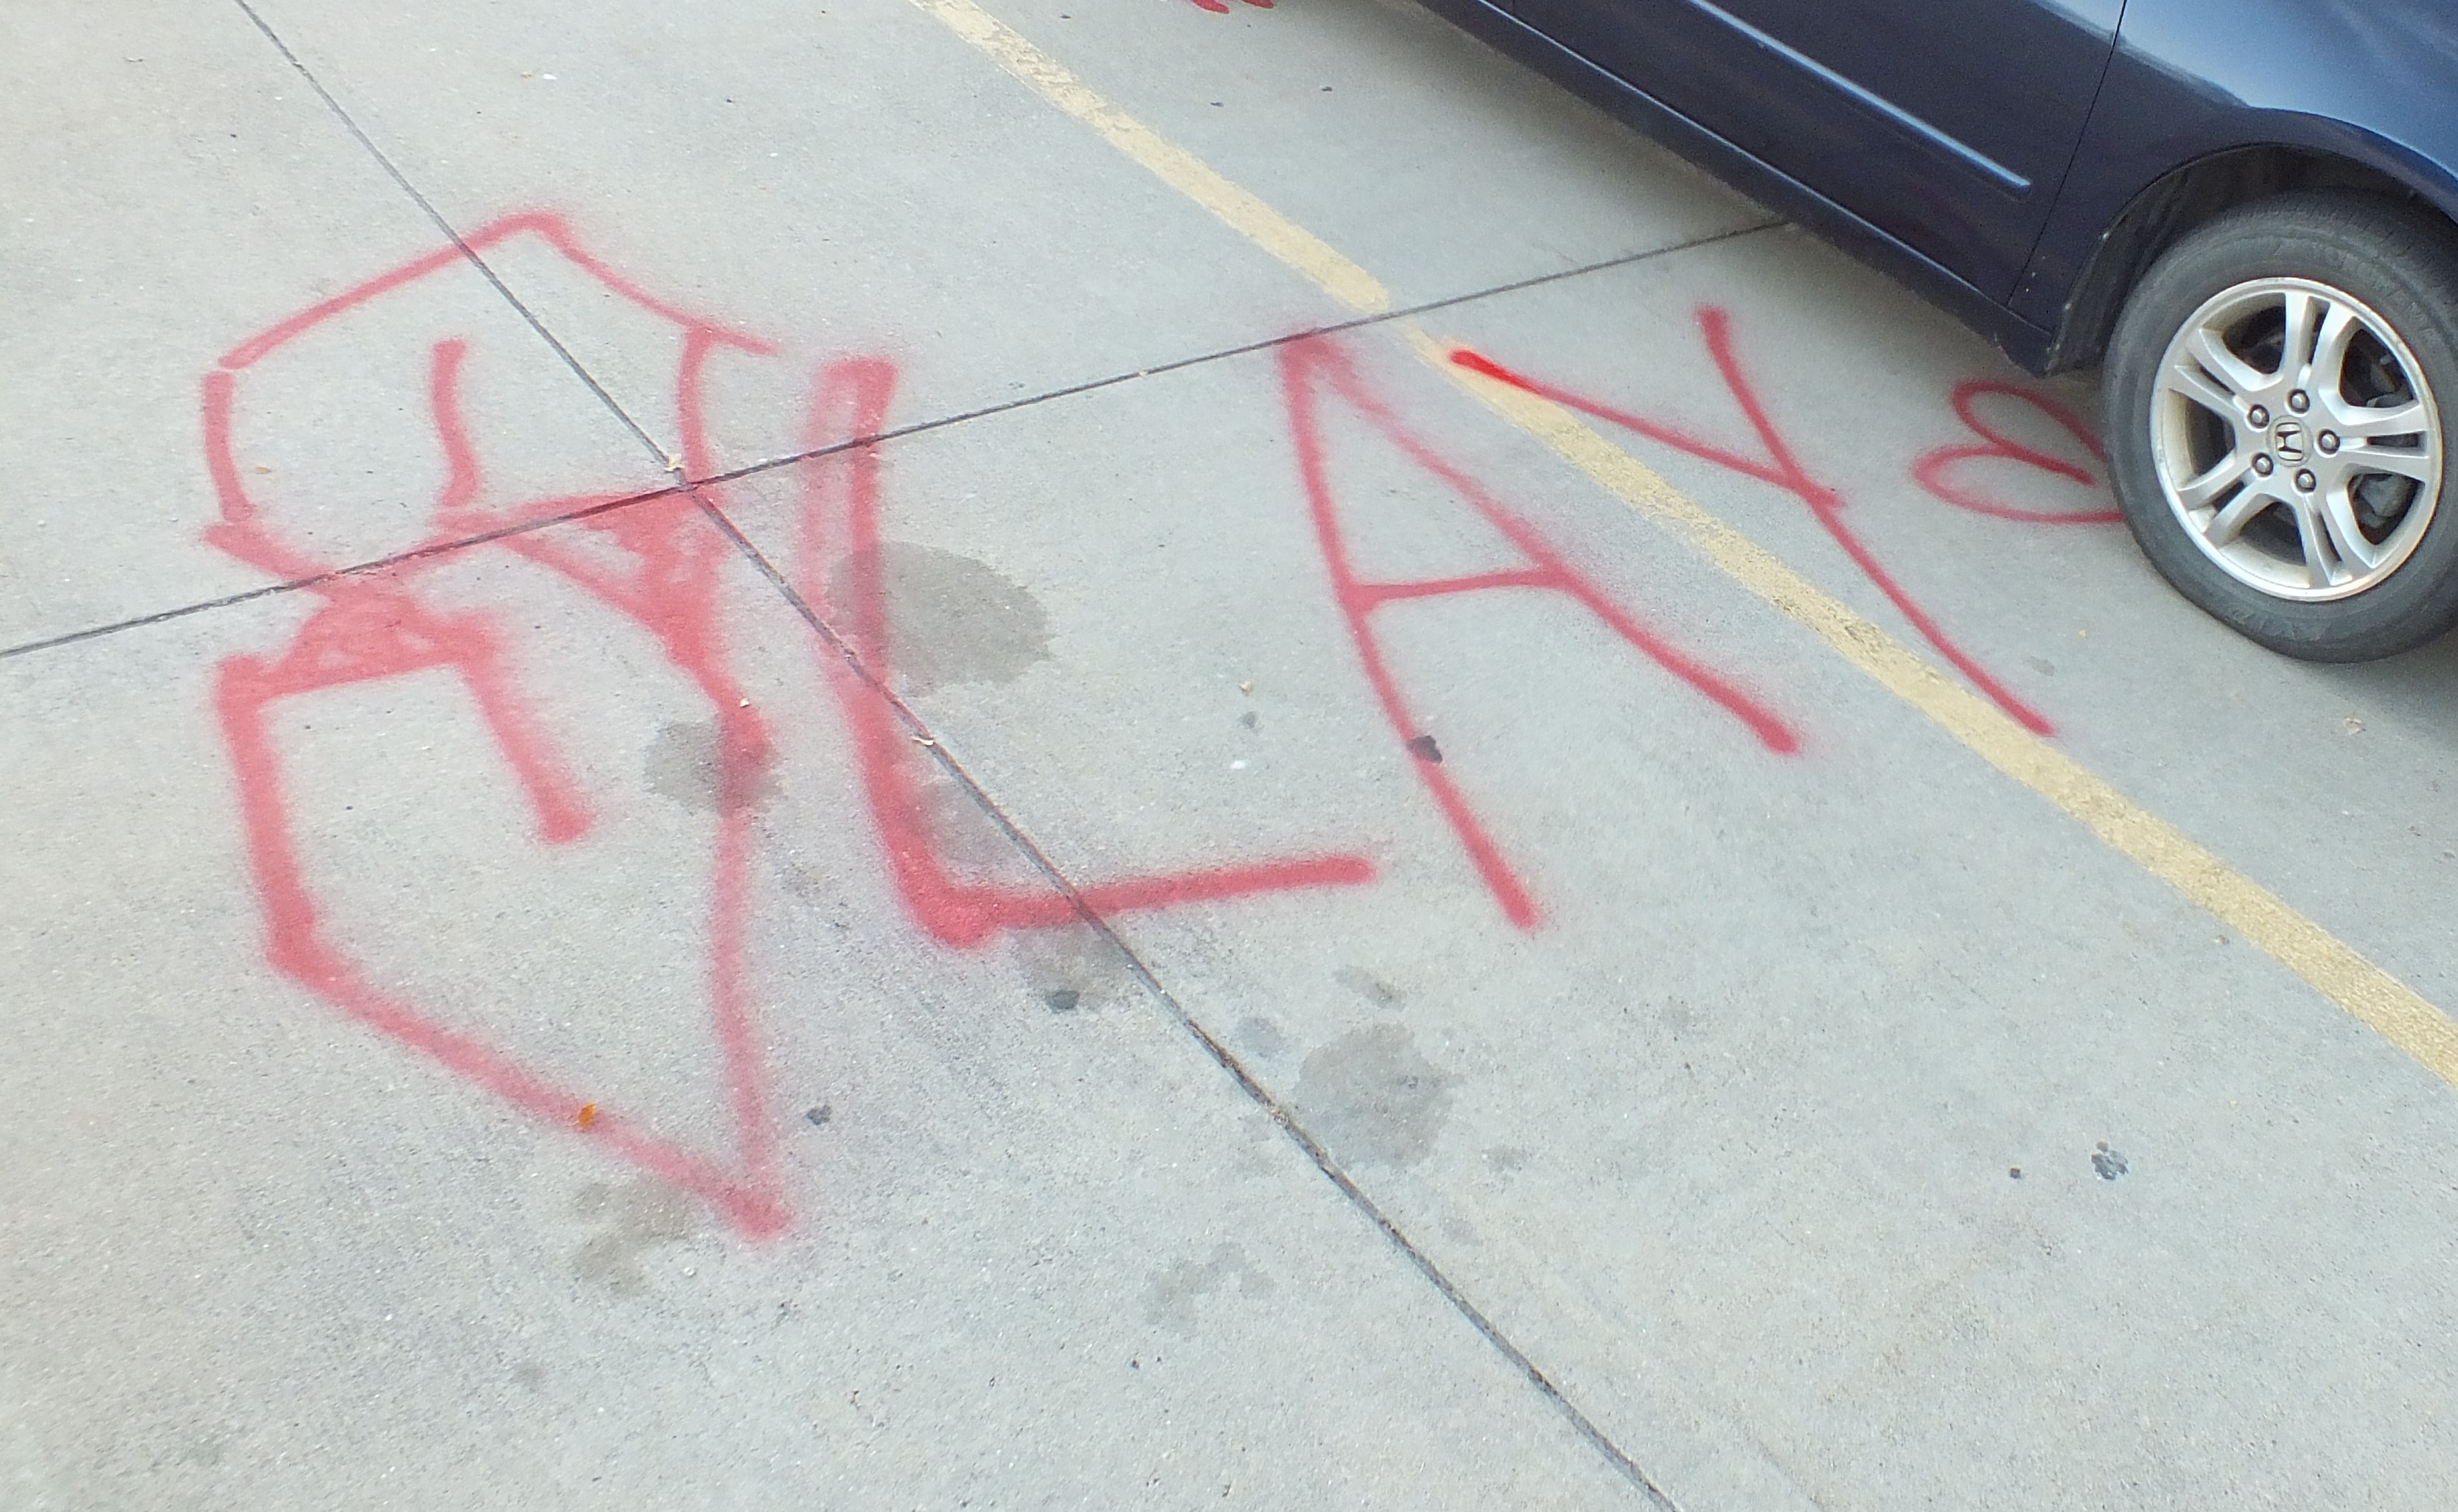 Image 2: red graffiti on pavement that says 